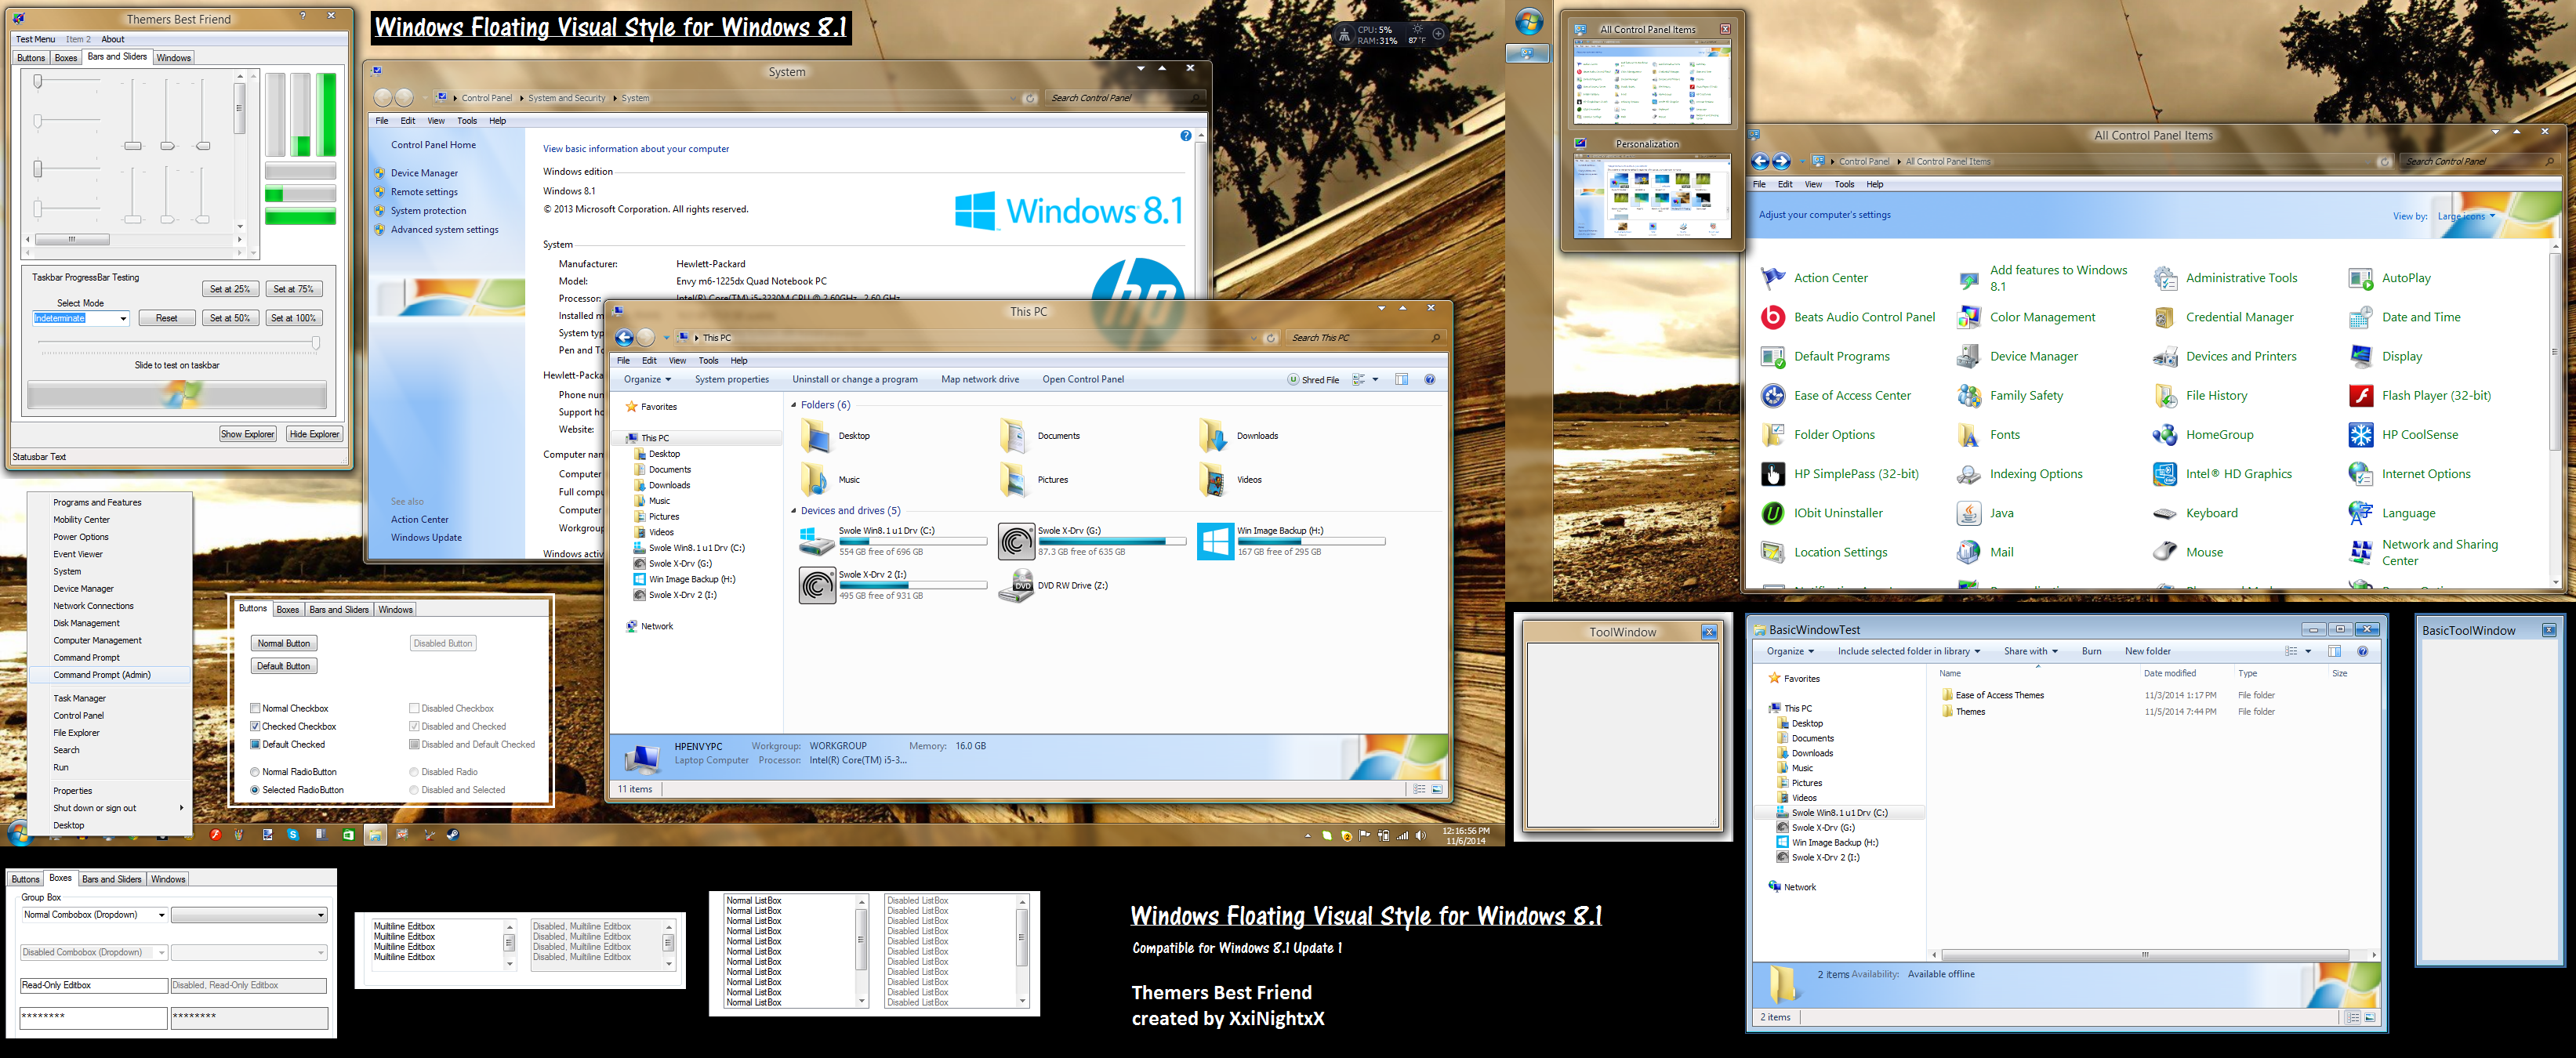 Windows Floating VS for Windows 8.1.1 (Nov 6, '14)